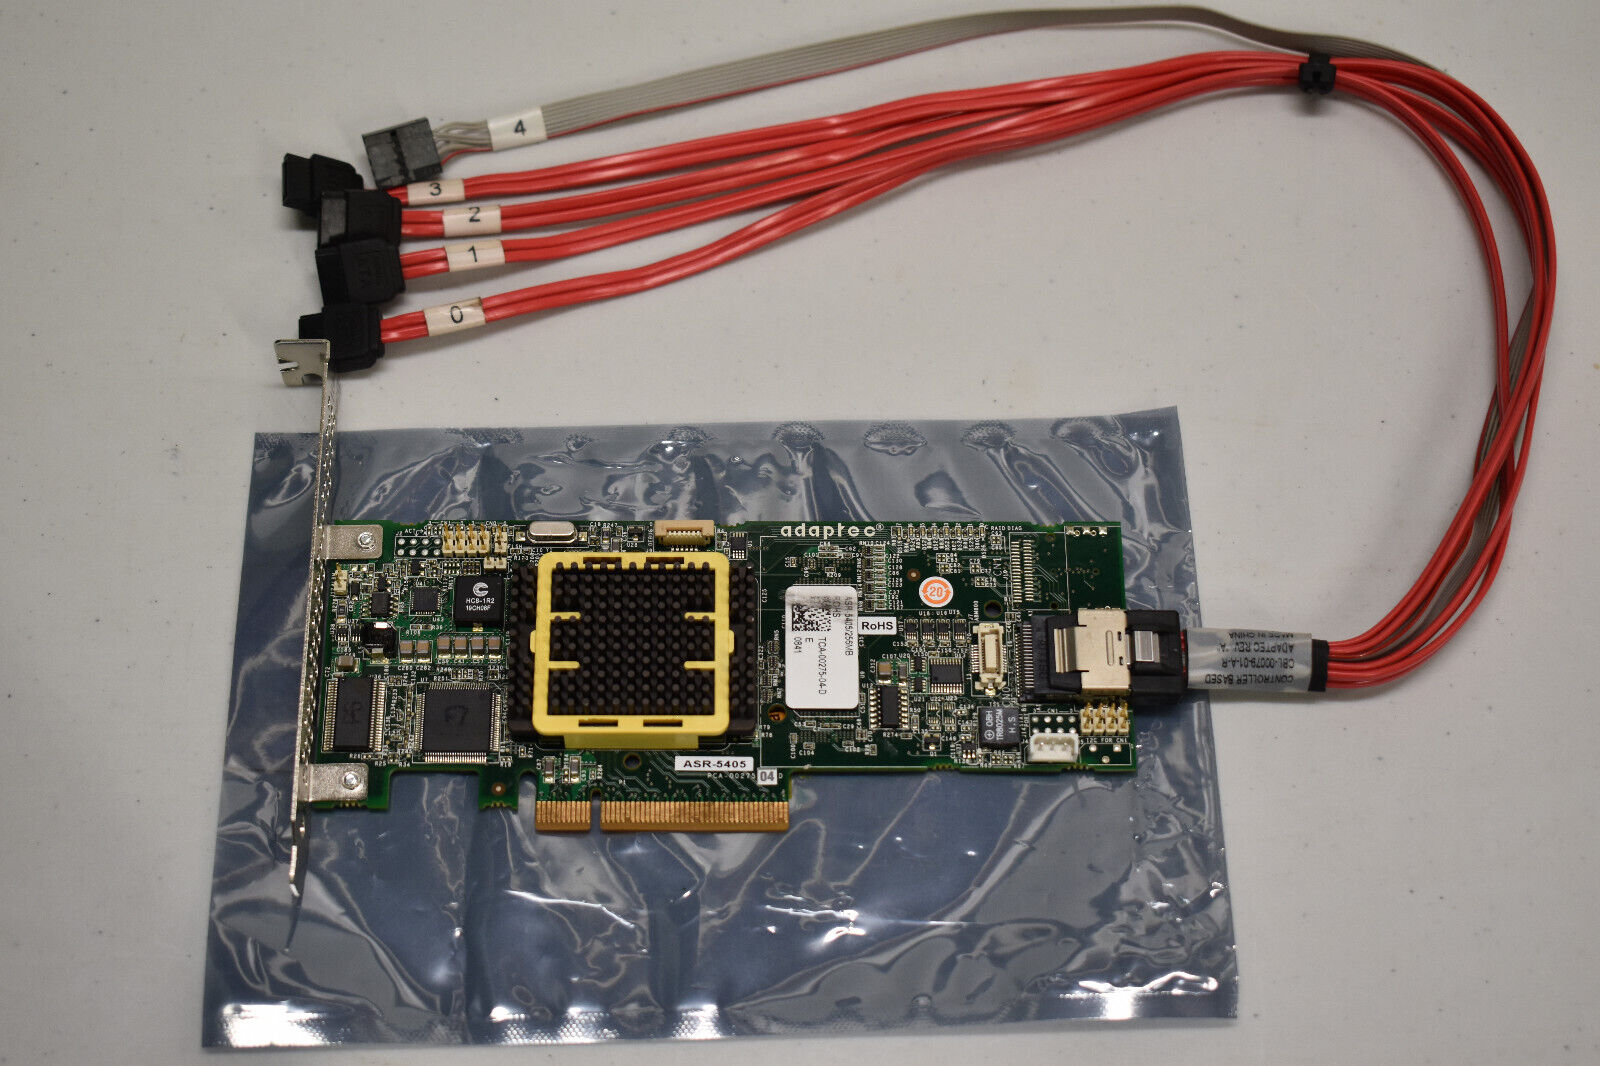 ADAPTEC ASR-5405 PCIE SAS/SATA RAID CONTROLLER CARD WITH 4-DRIVE SATA CABLE